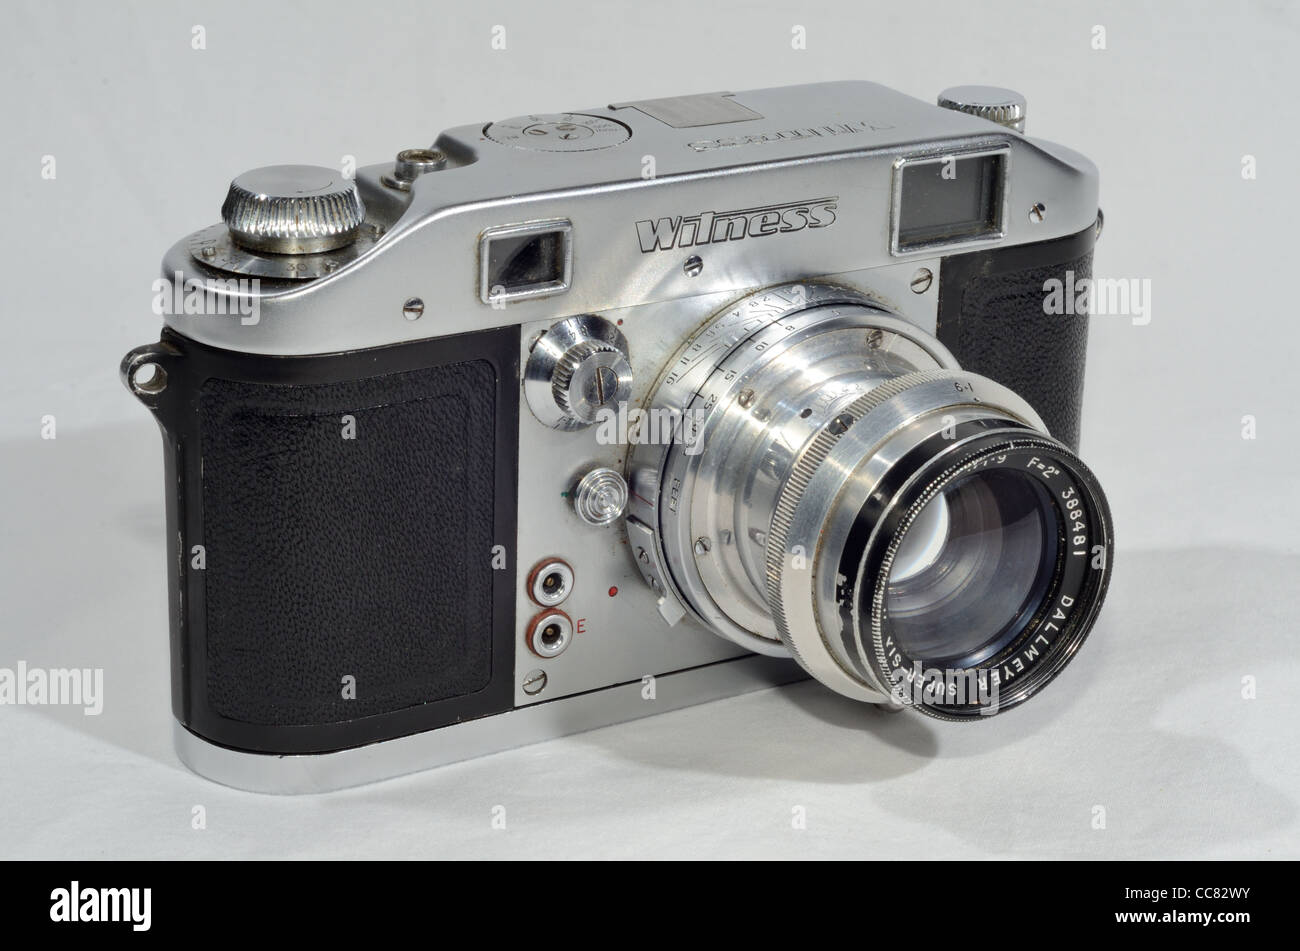 1952 Ilford Witness 35mm Rangefinder Camera Stock Photo